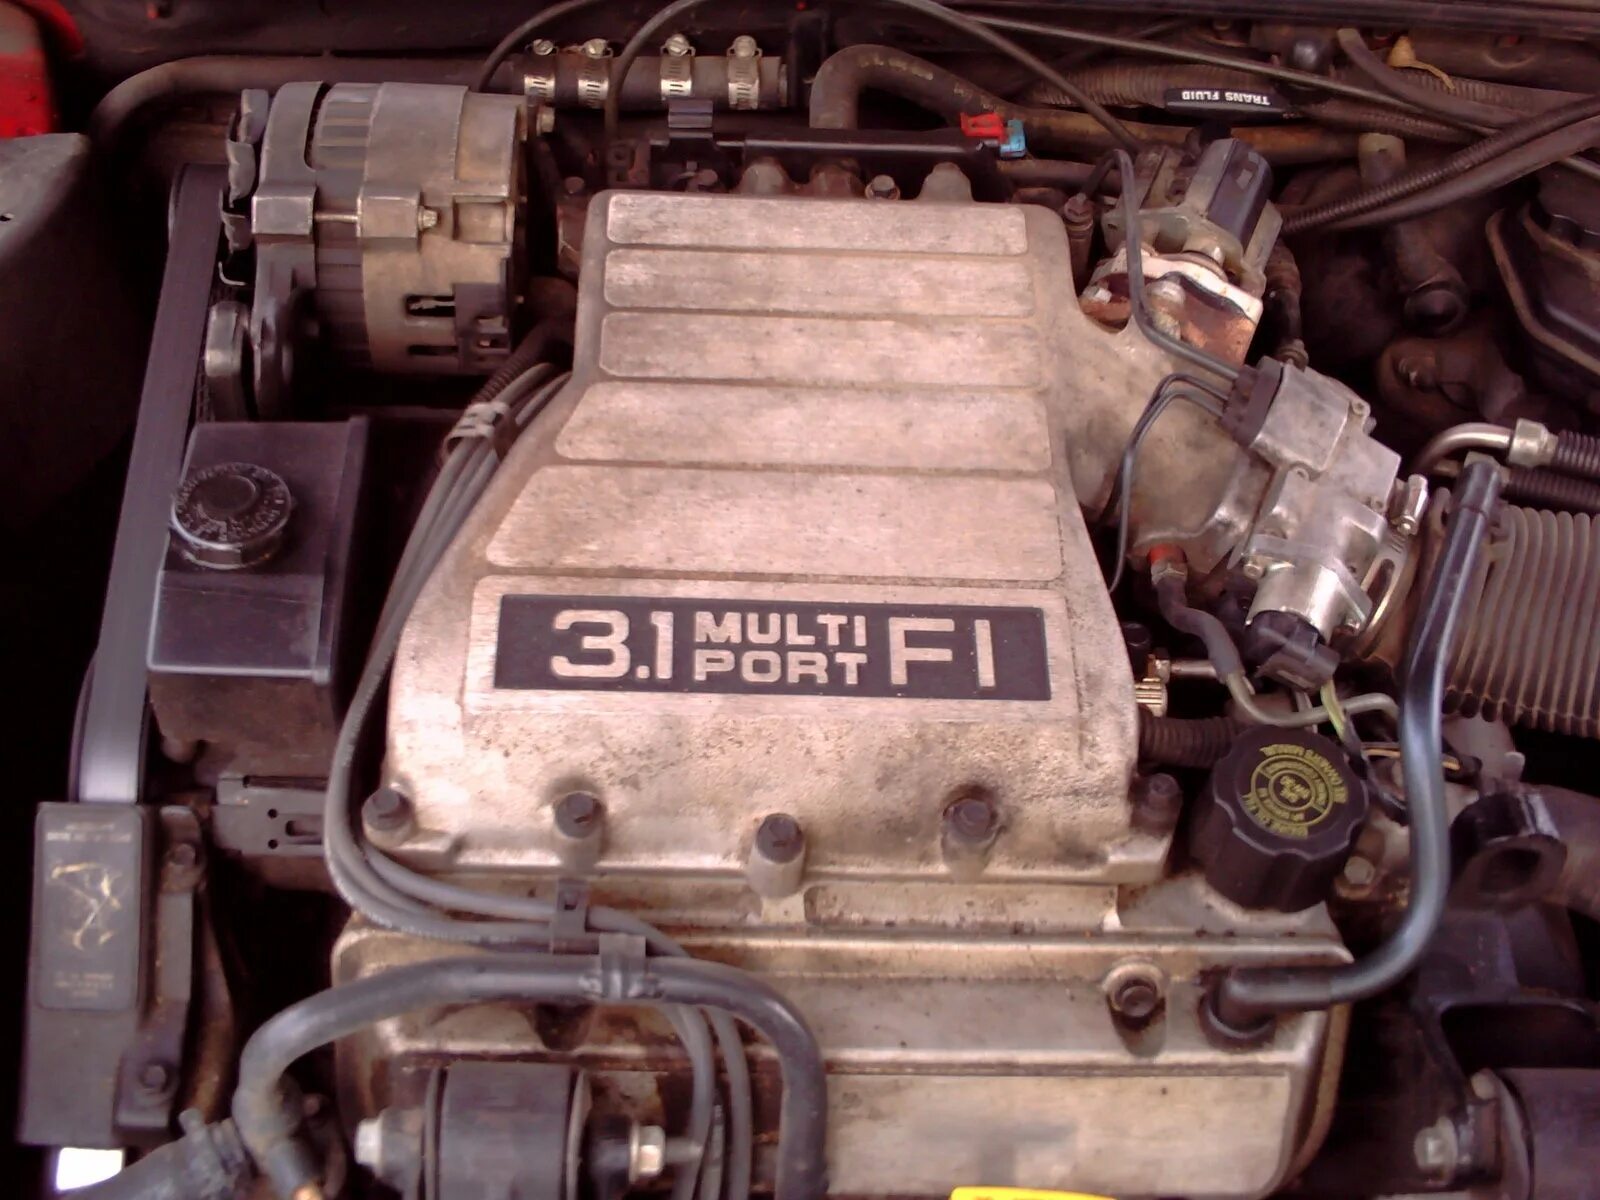 GM lh0 v6. GM lh0 v6 3.1. 3.1 Lho двигатель. Движок 3.4 на Шевроле Люмина.